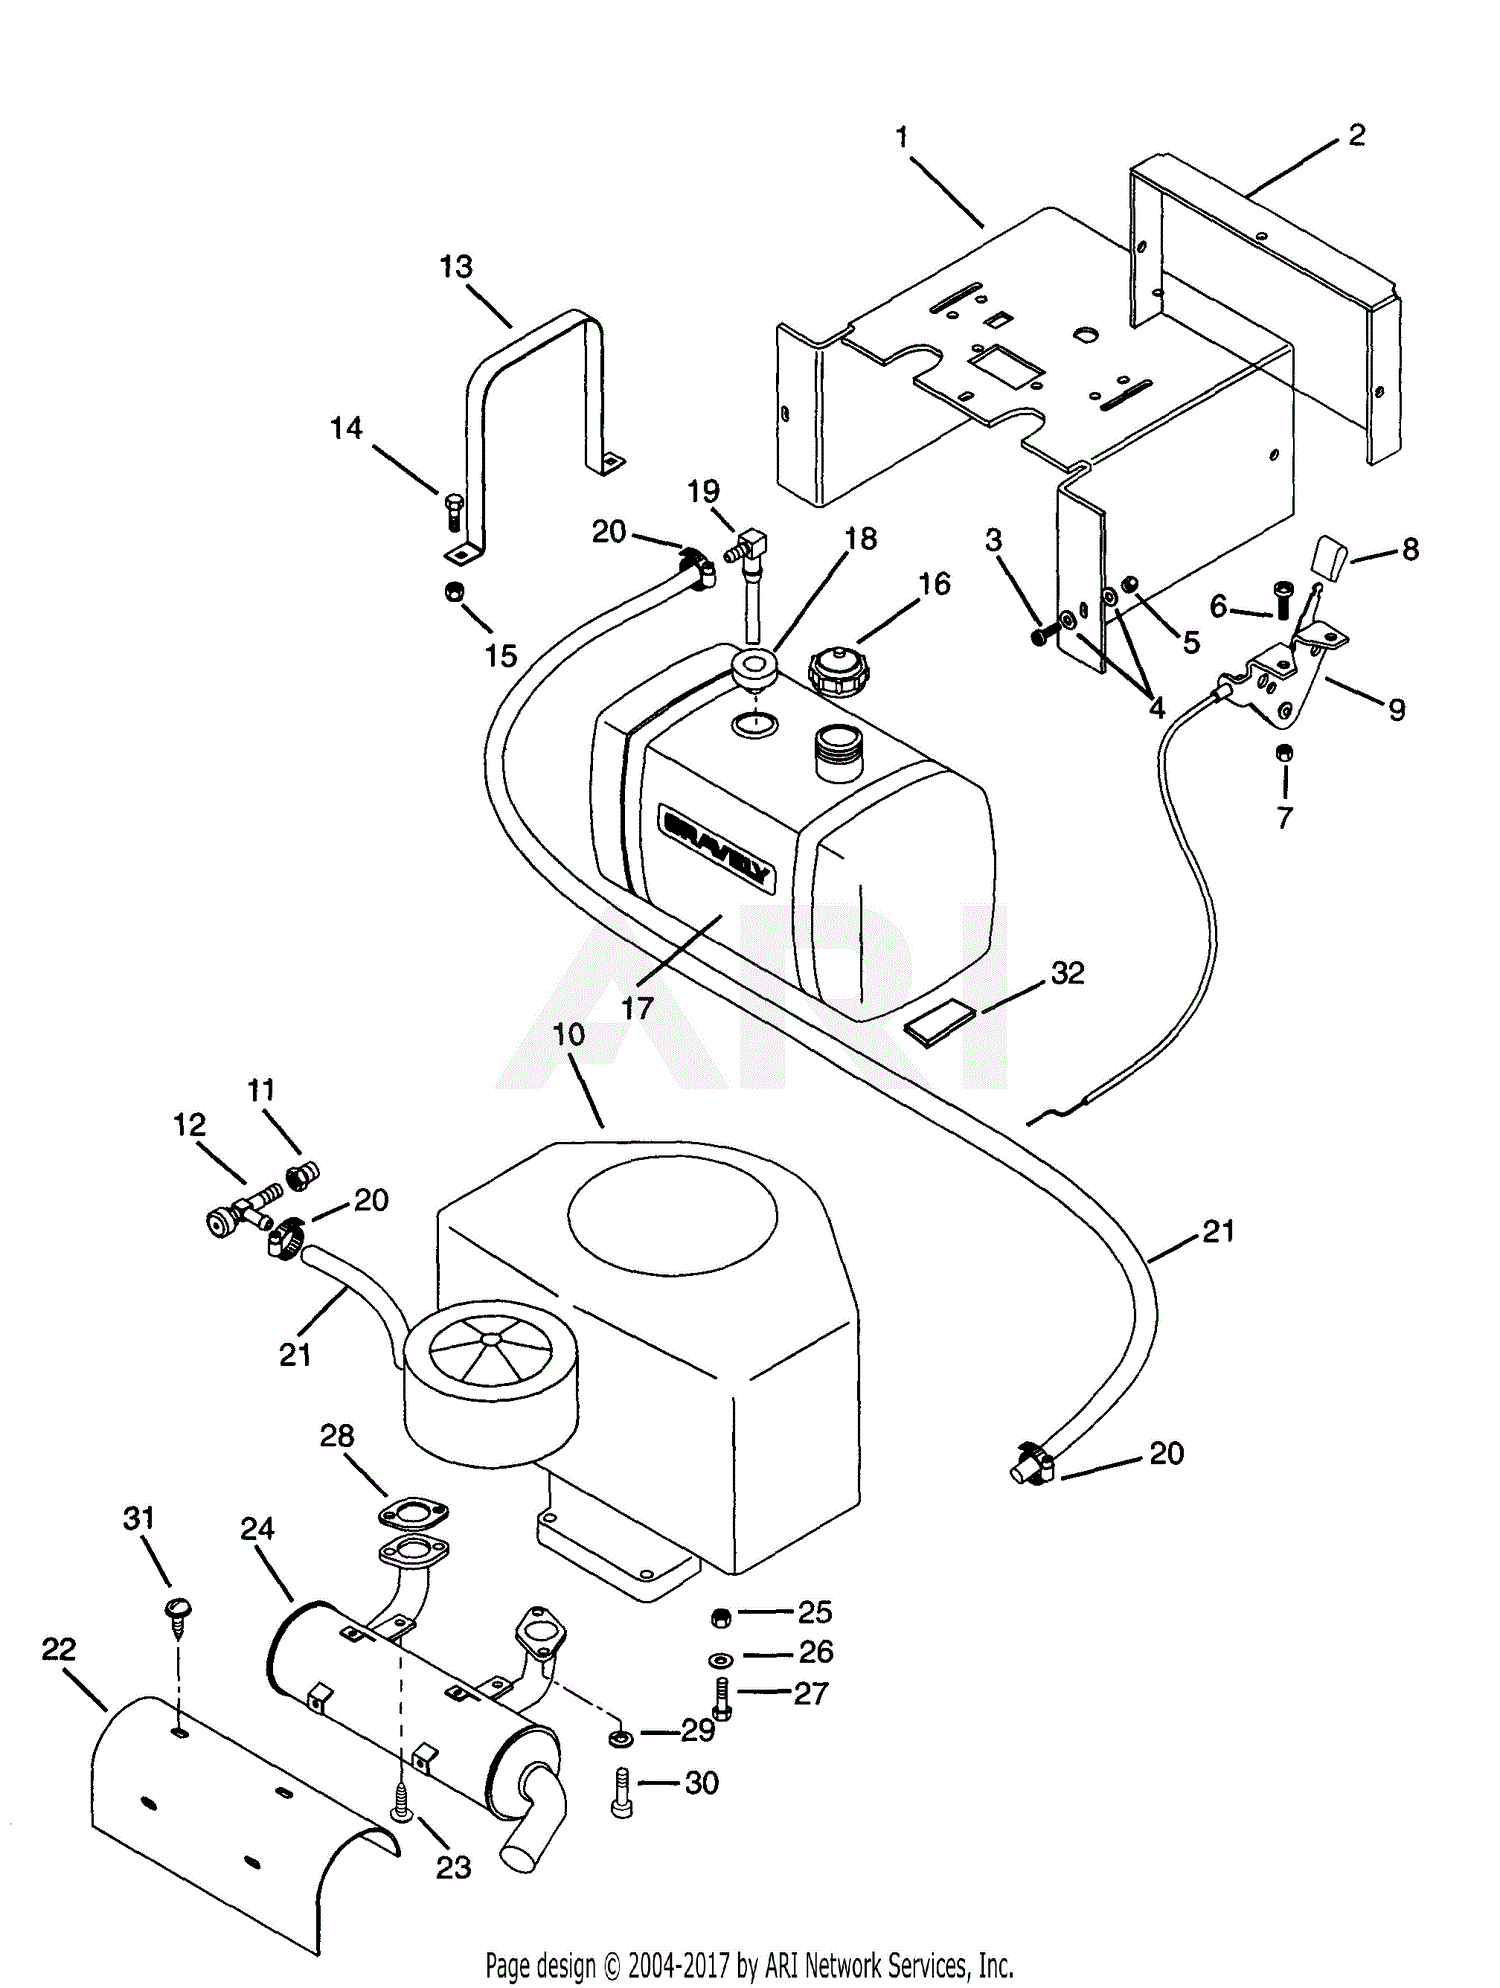 Kohler Engine Diagram 175